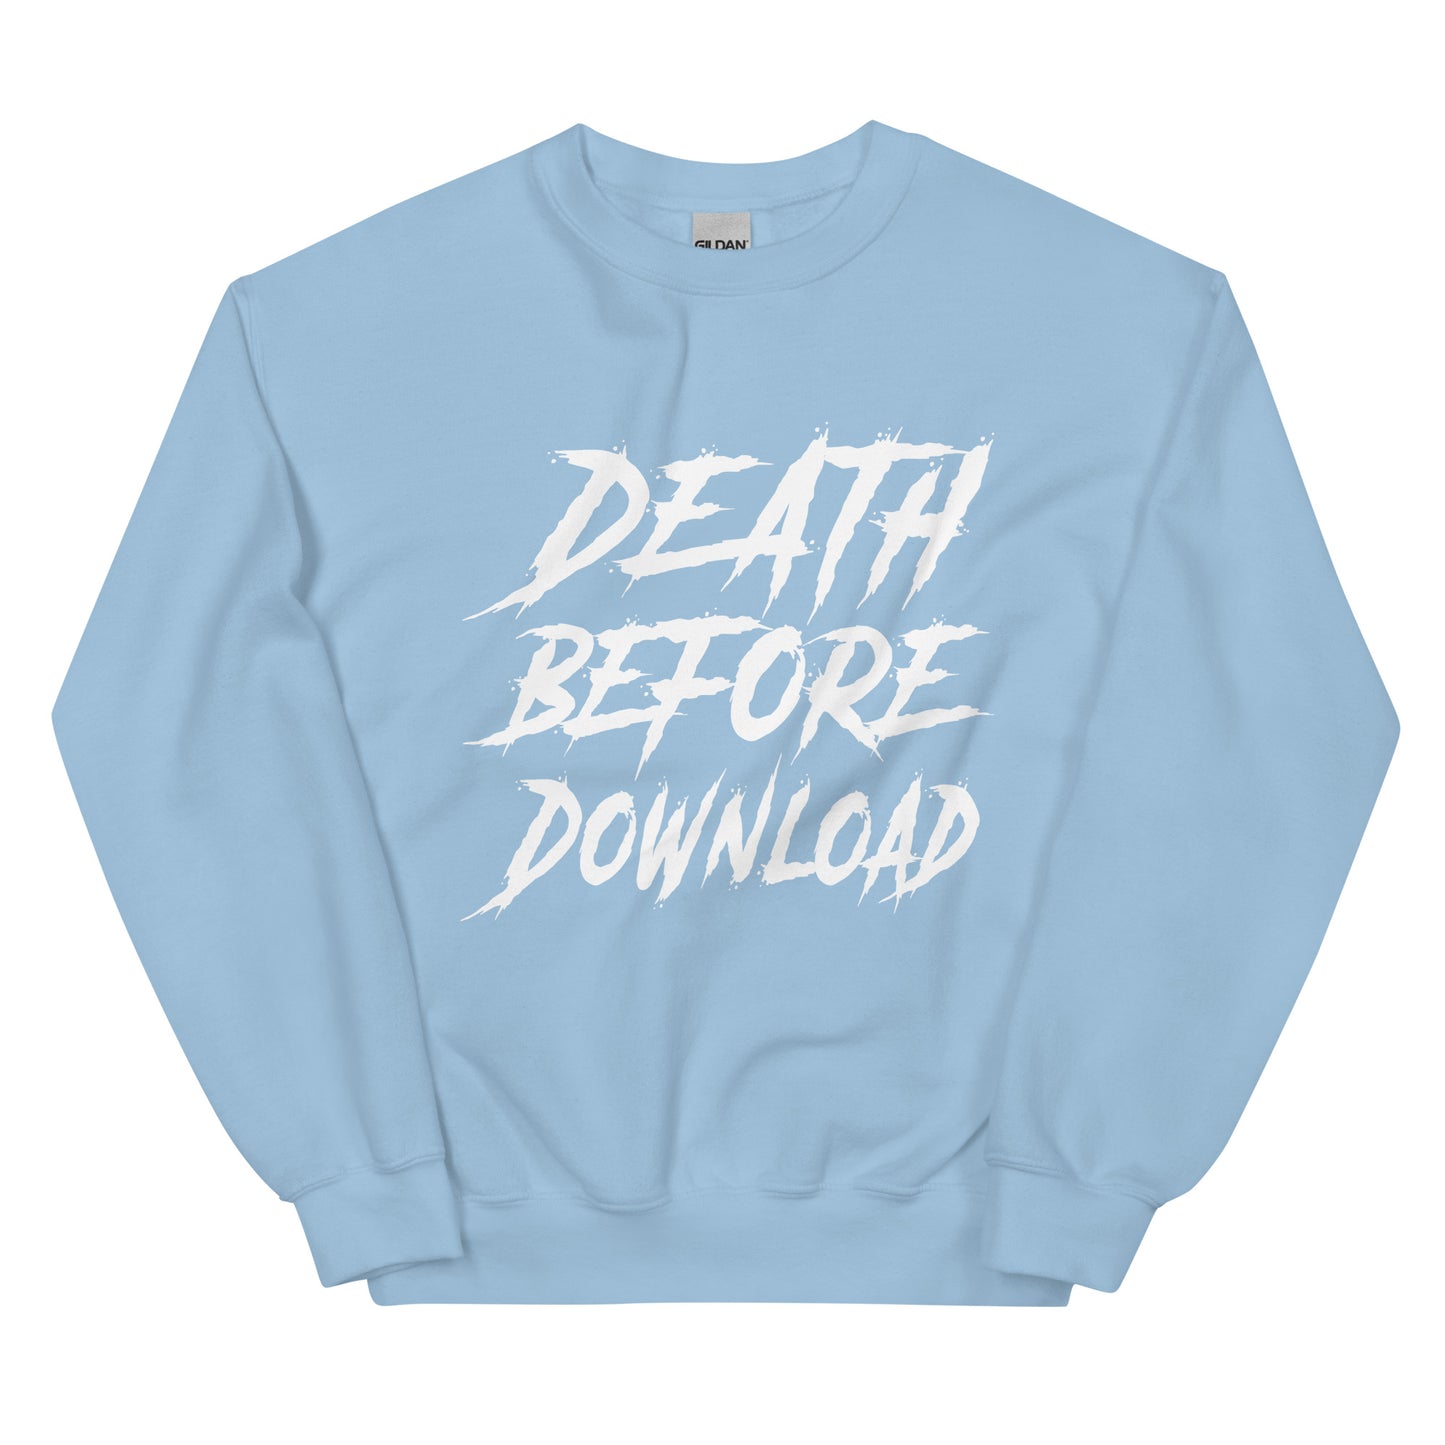 Death before download whistler printed crewneck